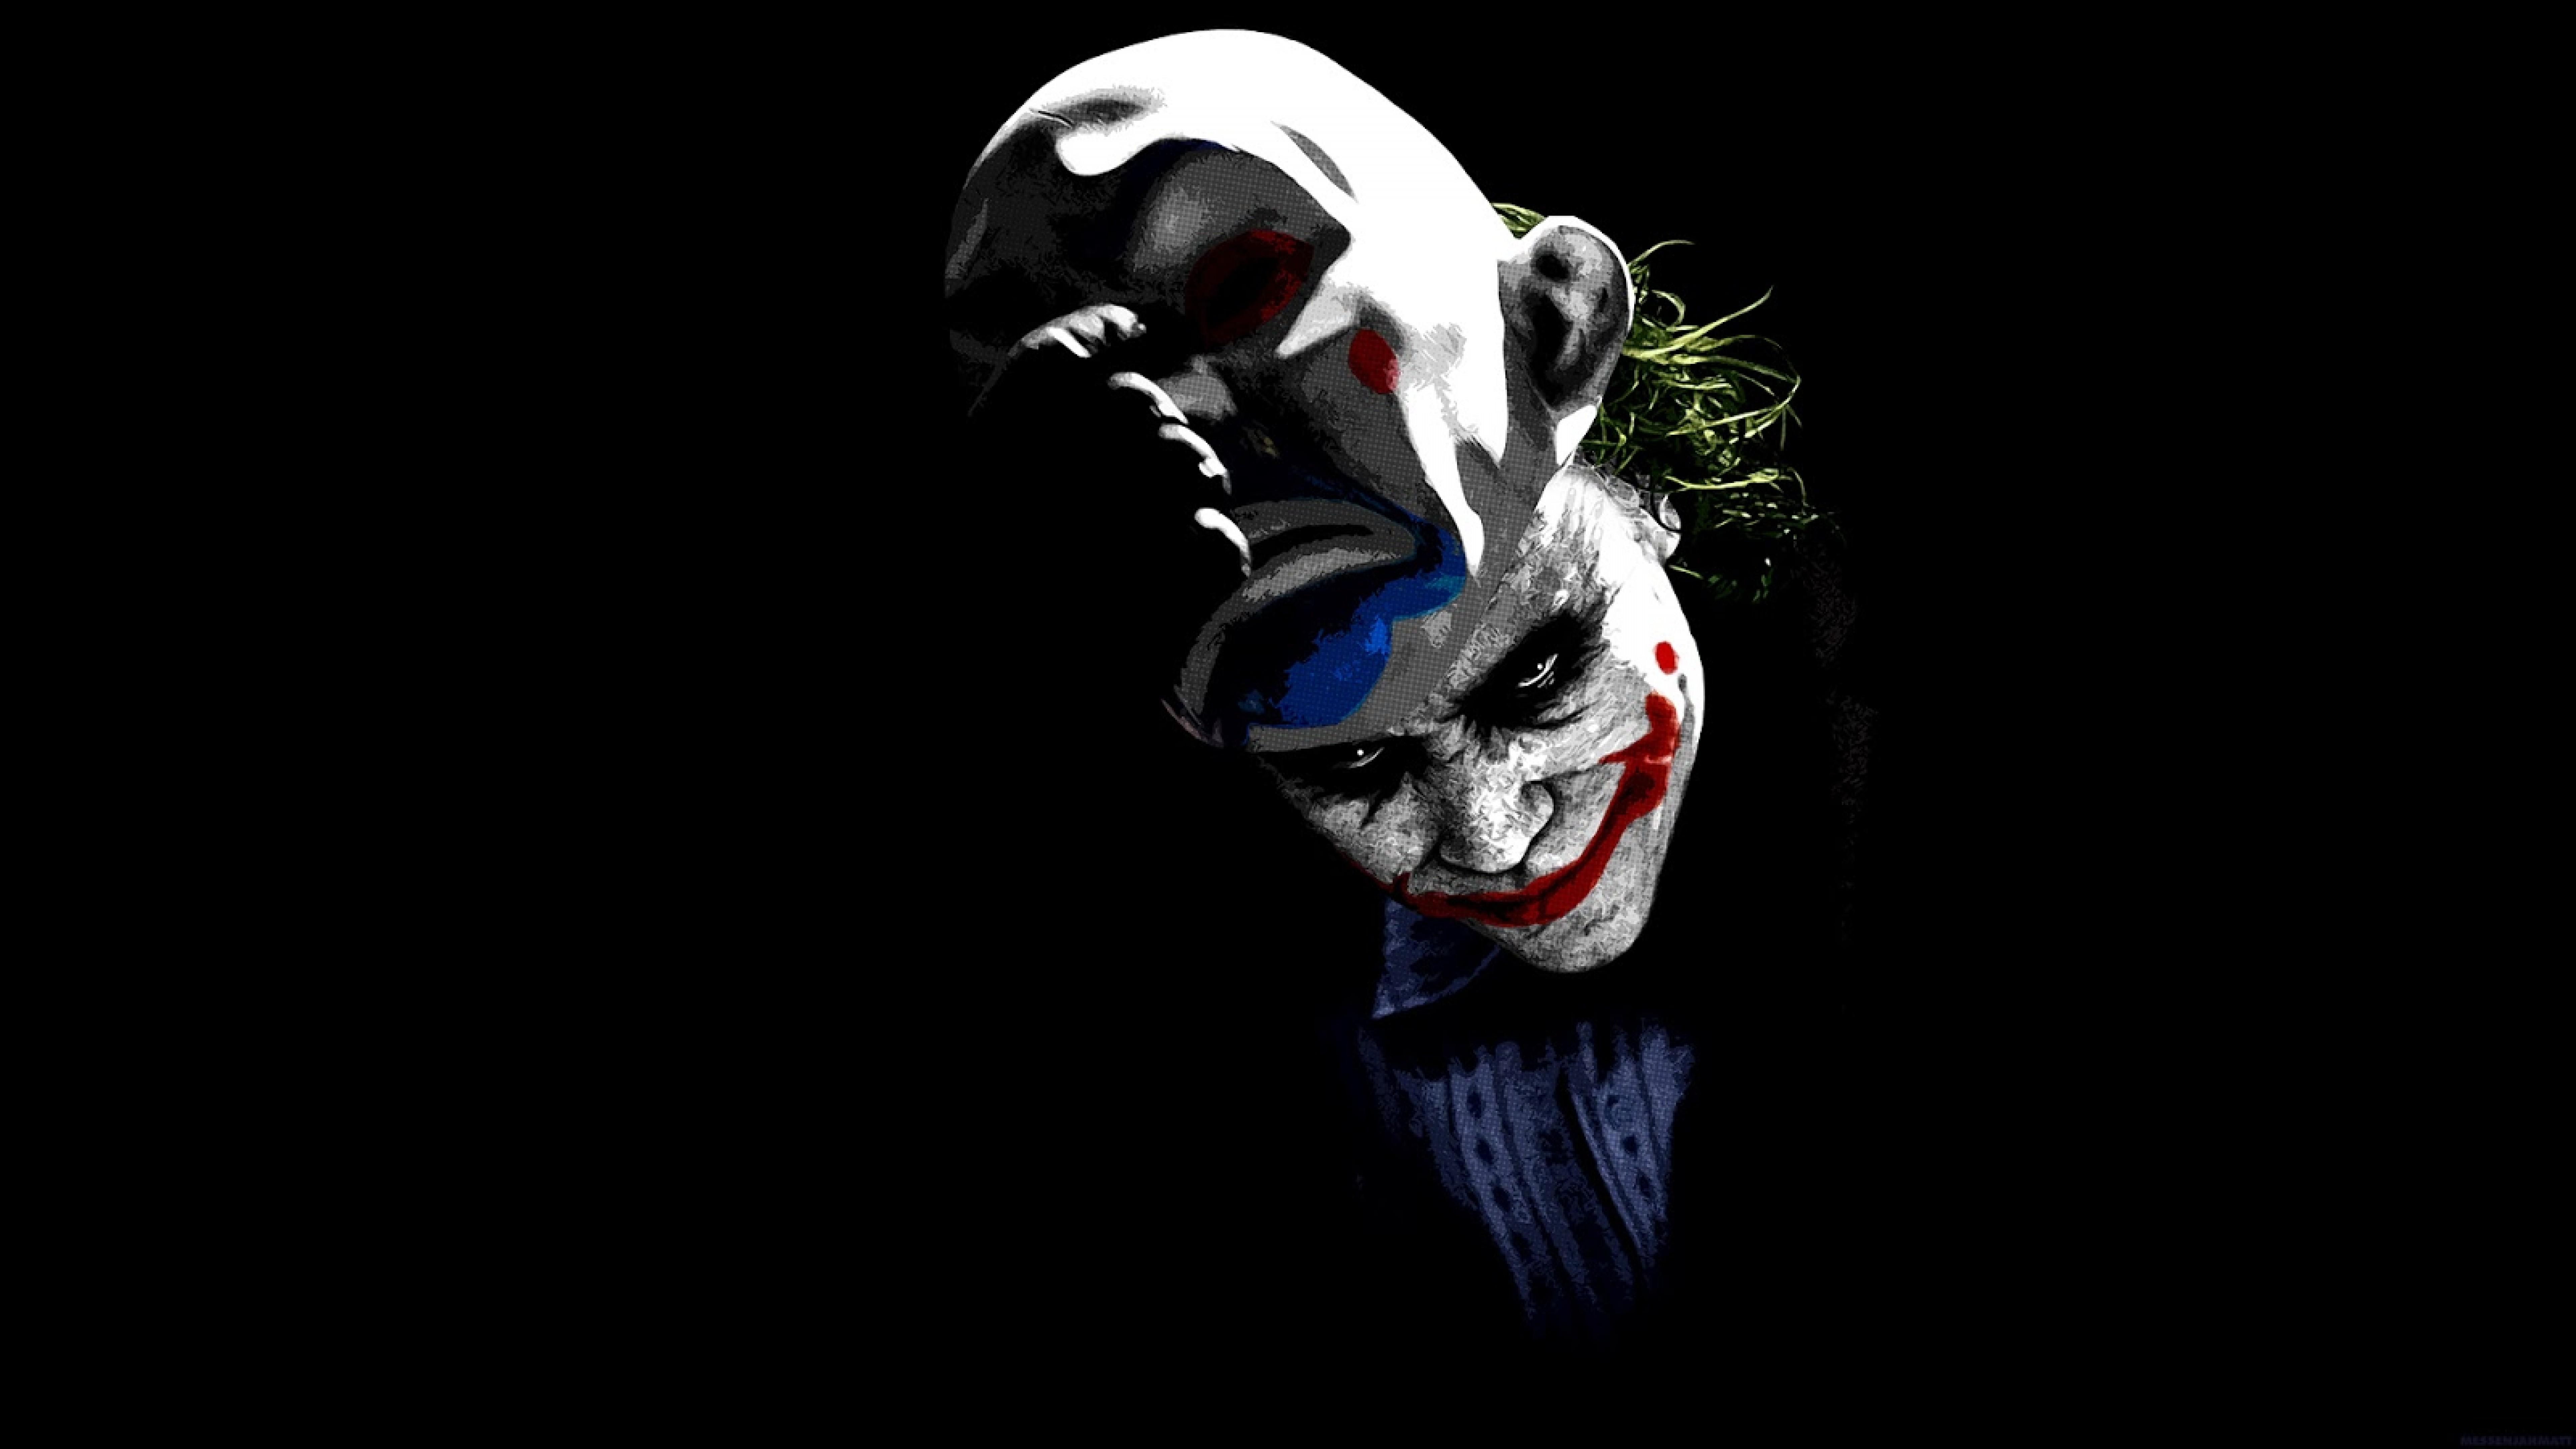 Joker 8k 8k HD 4k Wallpaper, Image, Background